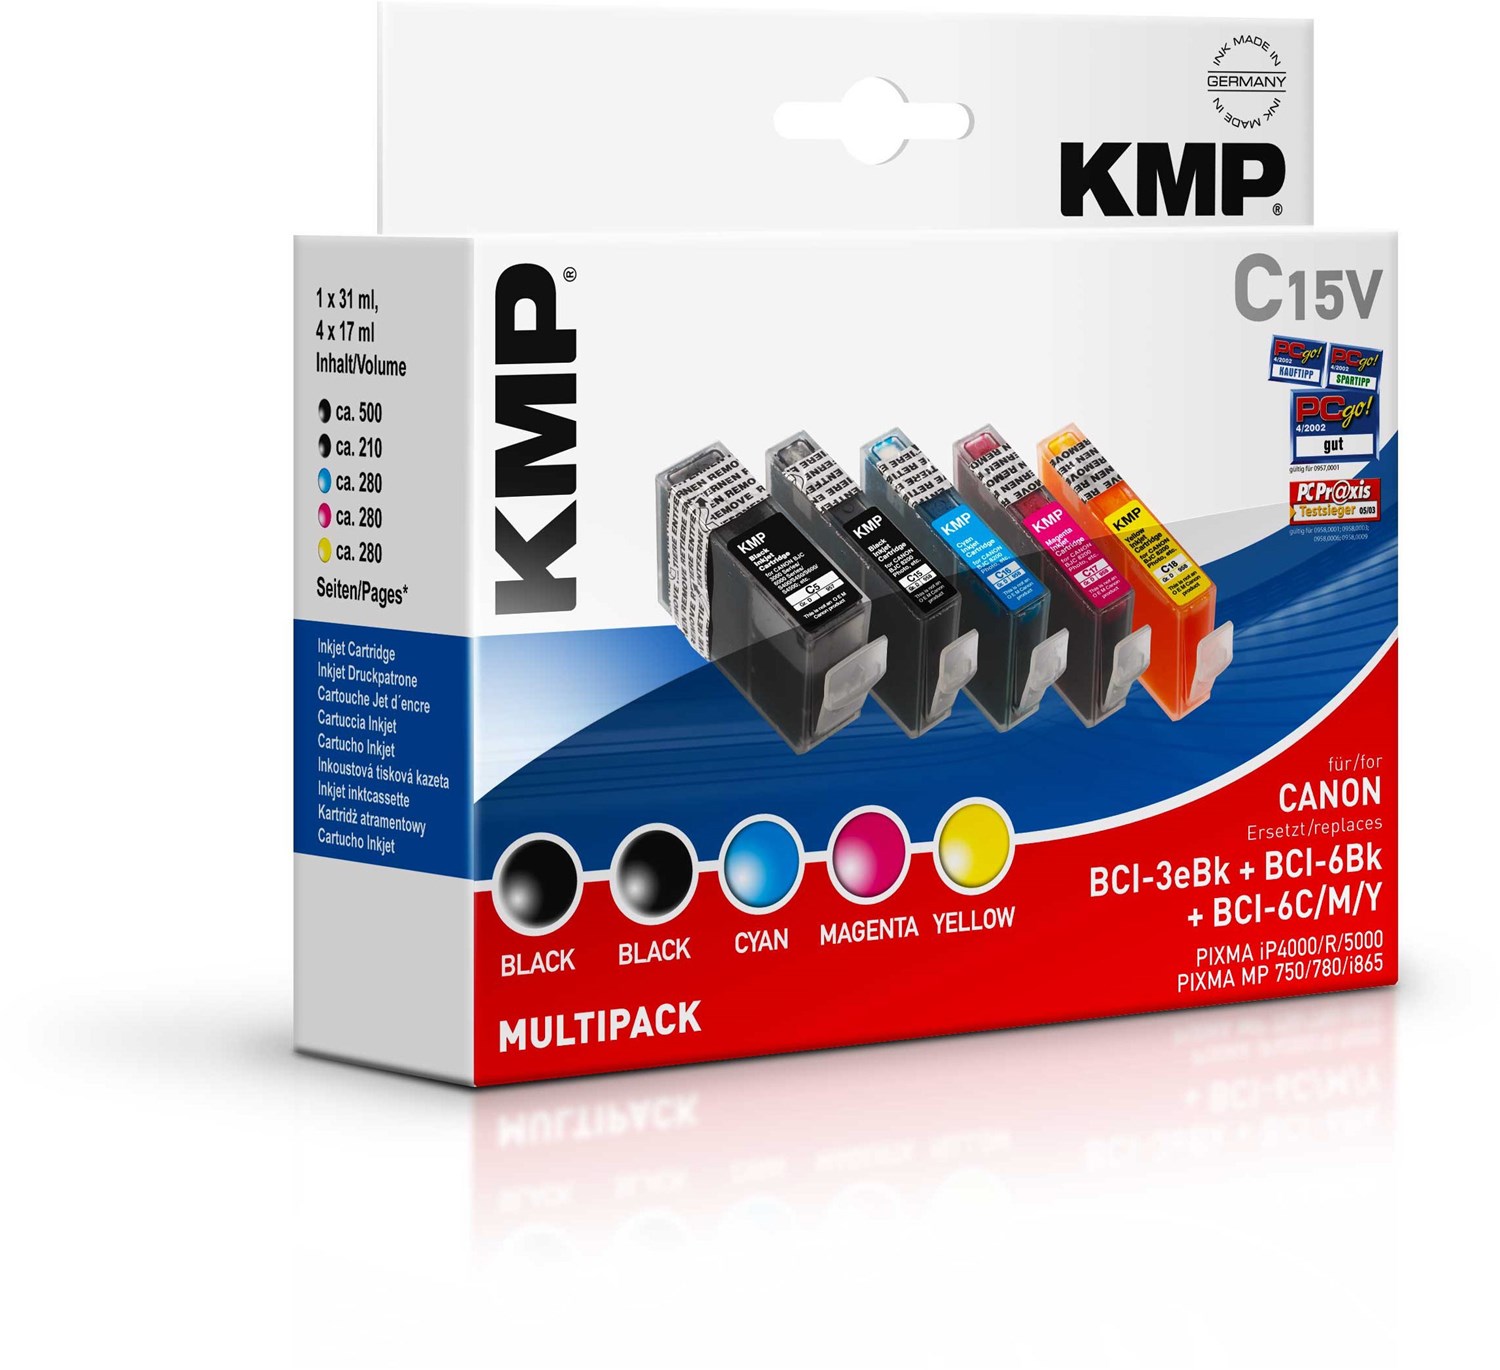 KMP C15V Multipack Tinten-Multipack 4-farbig